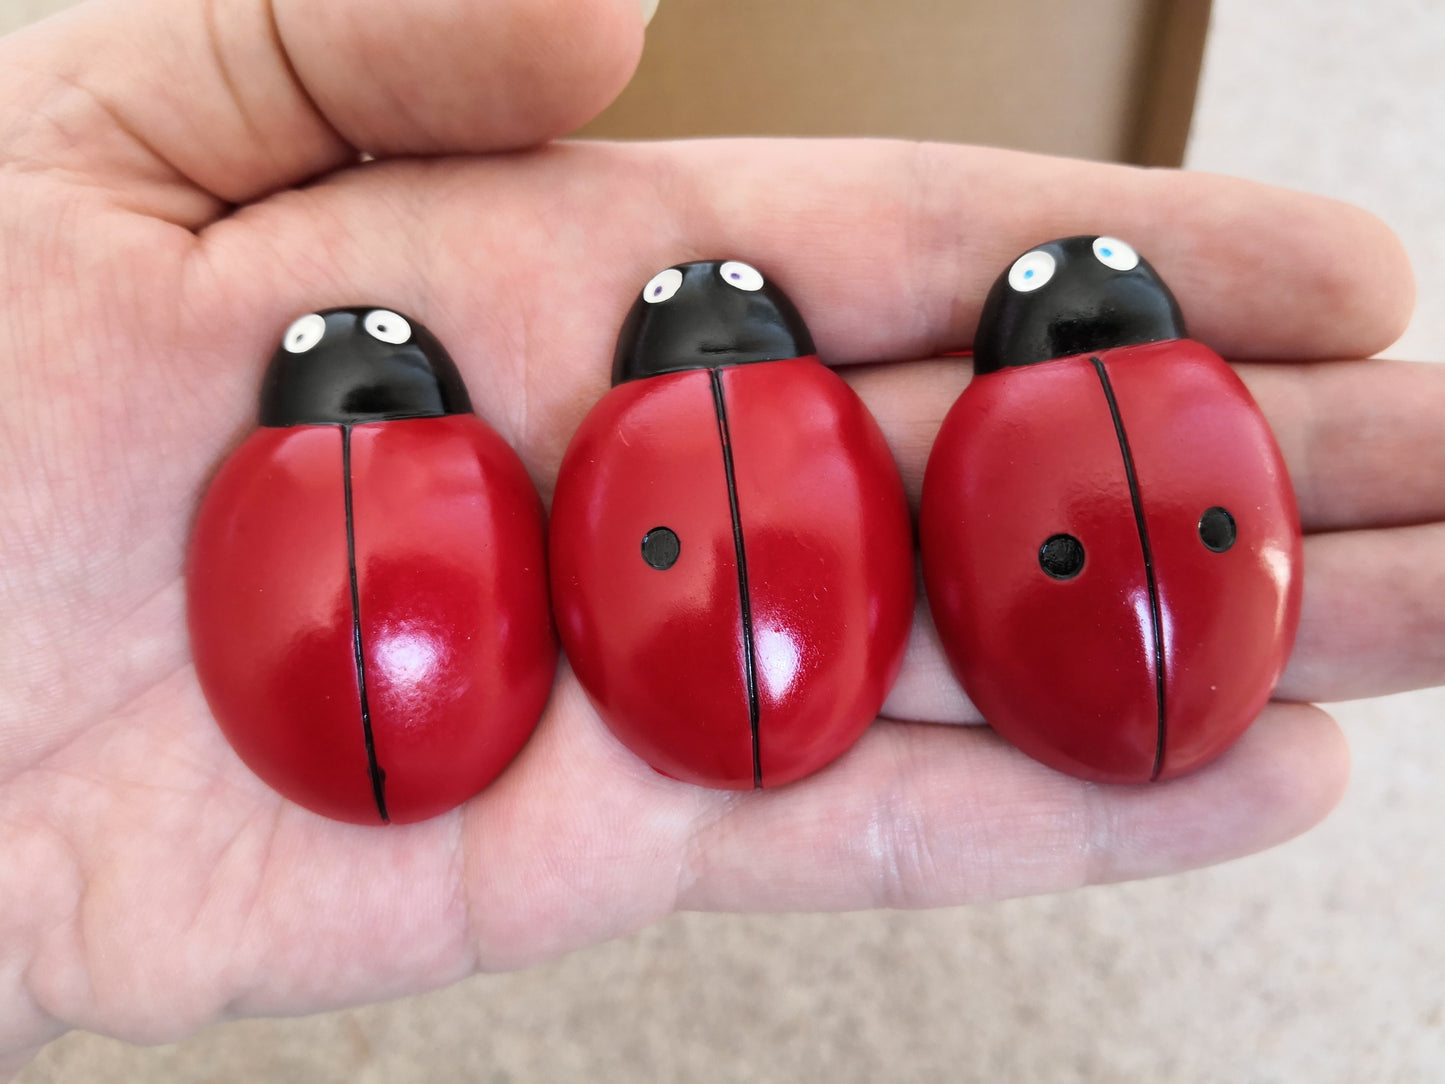 Full Set Ladybird Stones